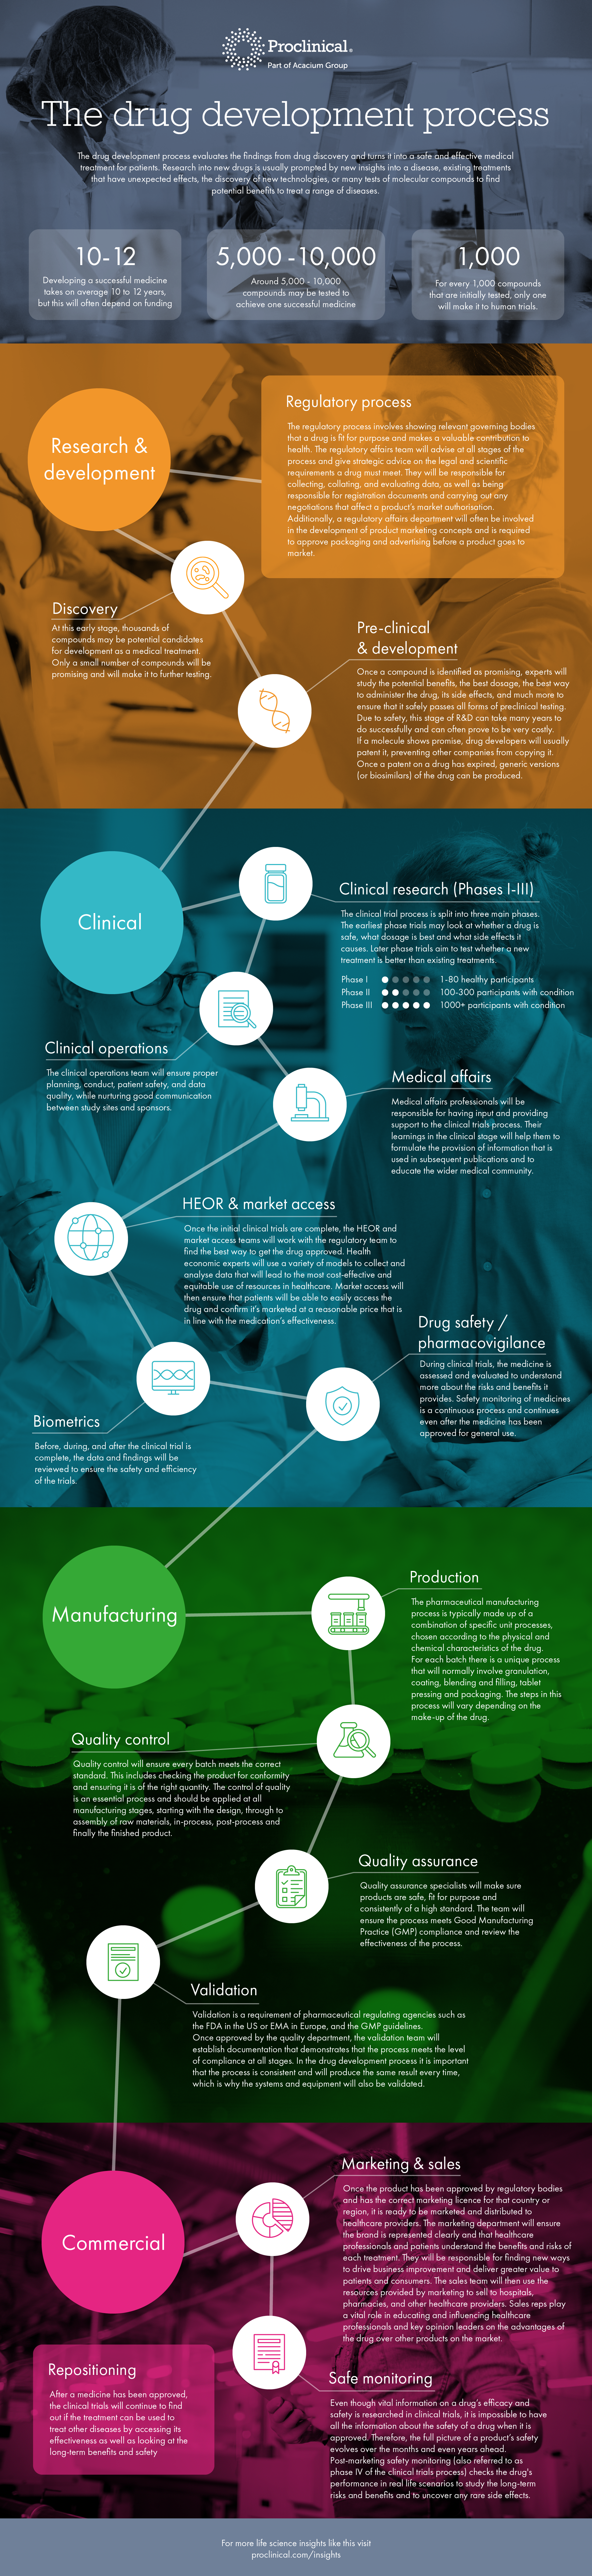 Infographic: Pharmaceutical drug development process infographic